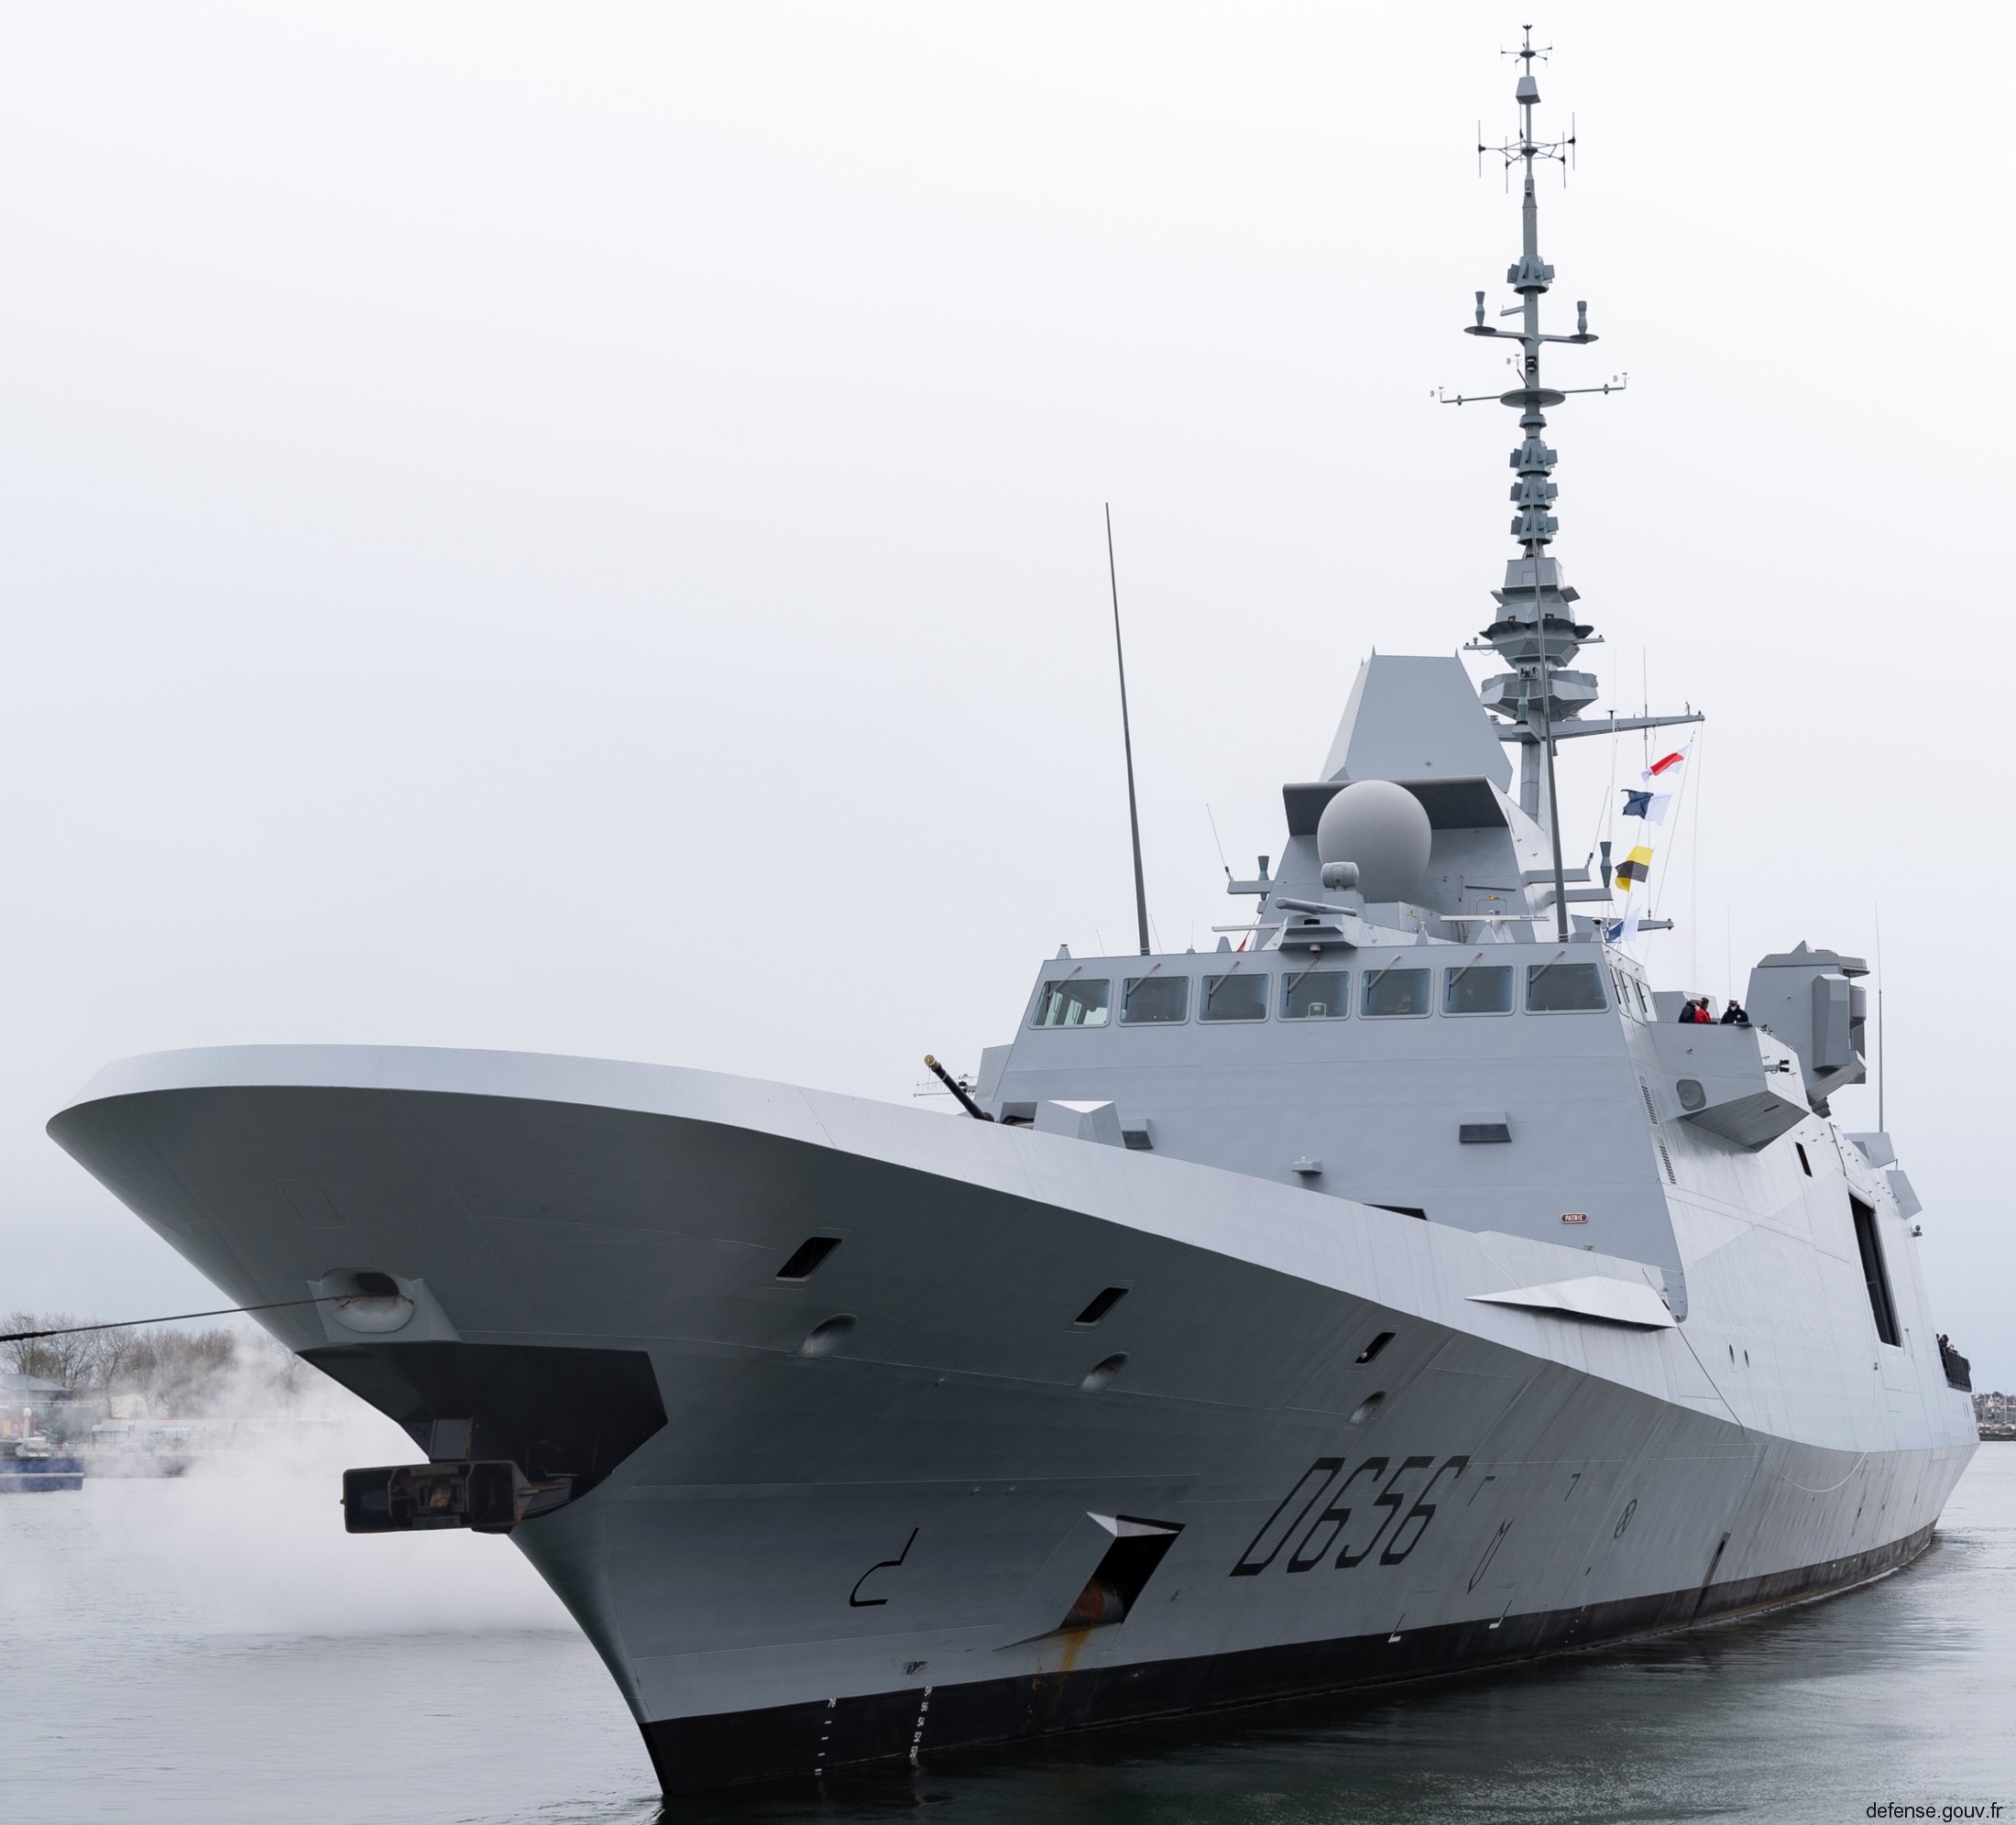 d-656 fs alsace fremm aquitaine class frigate fregate multi purpose french navy marine nationale 08